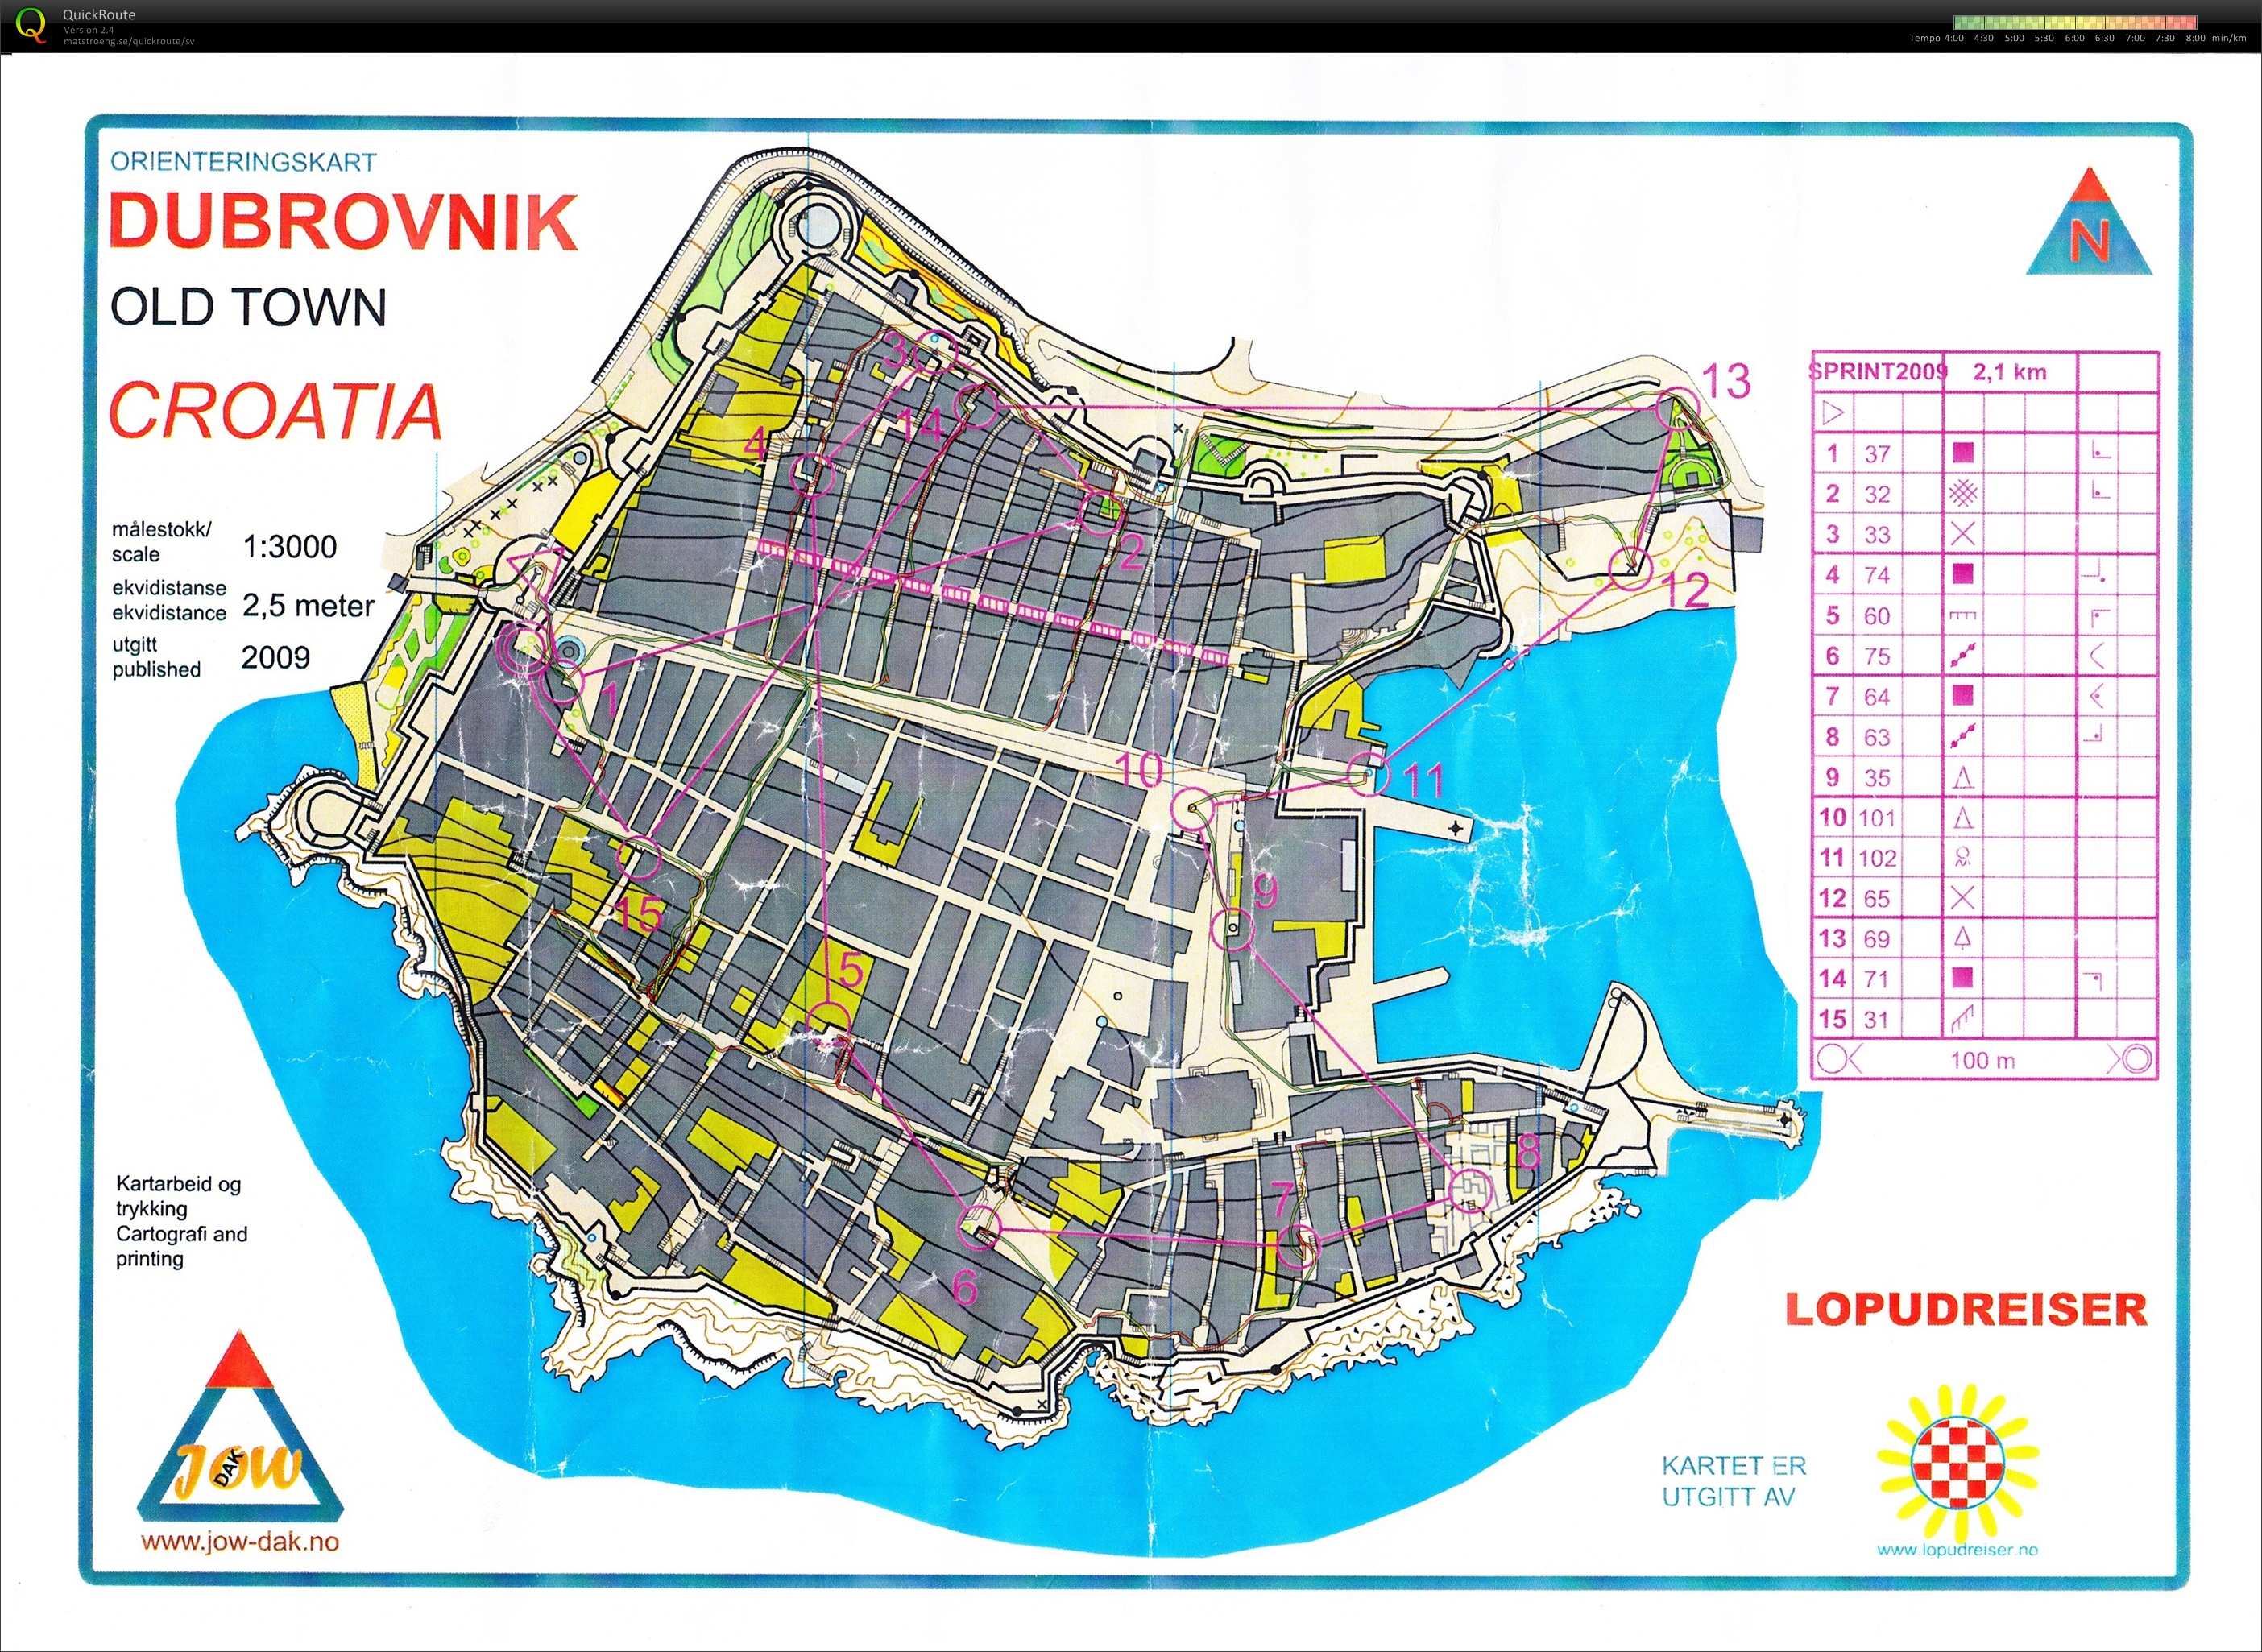 Sprinttrening, Dubrovnik (27-07-2013)